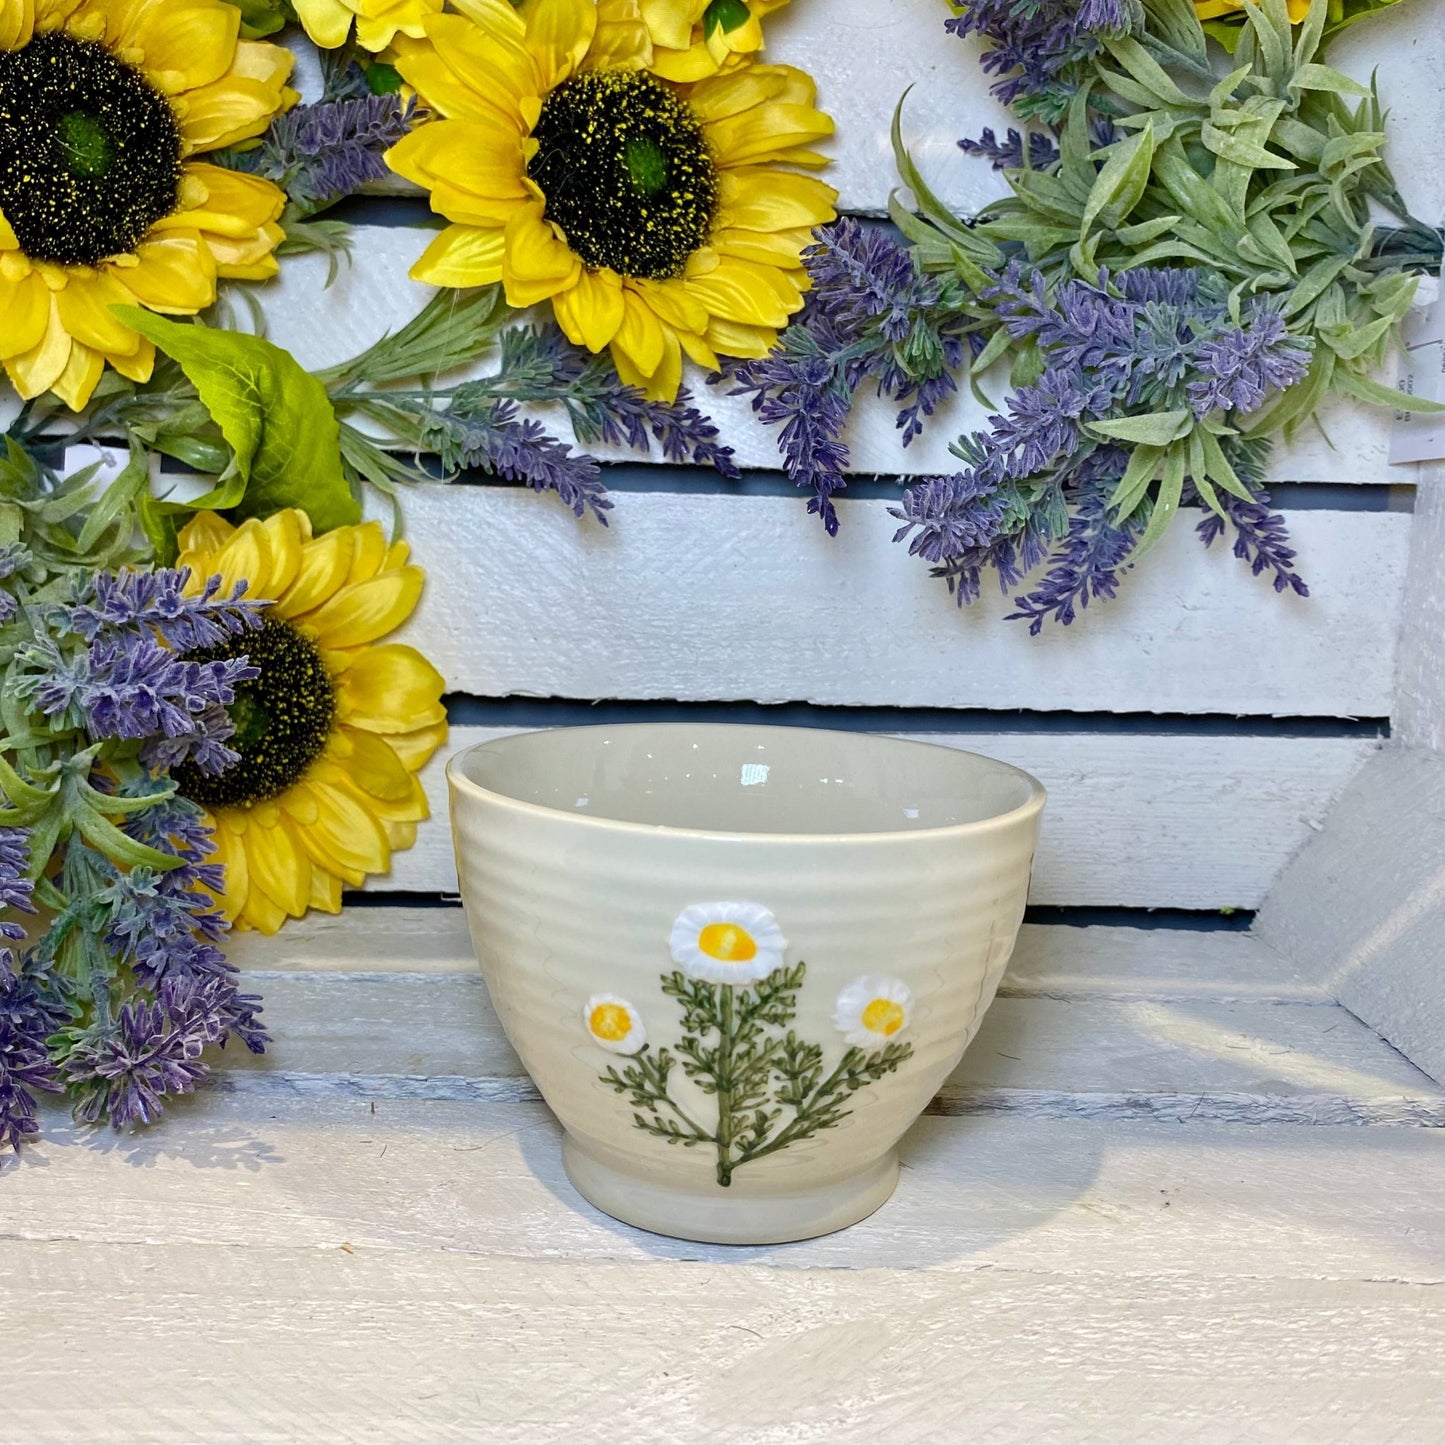 Margerite Daisy Ceramic Bowl 13cm - Bumble Living